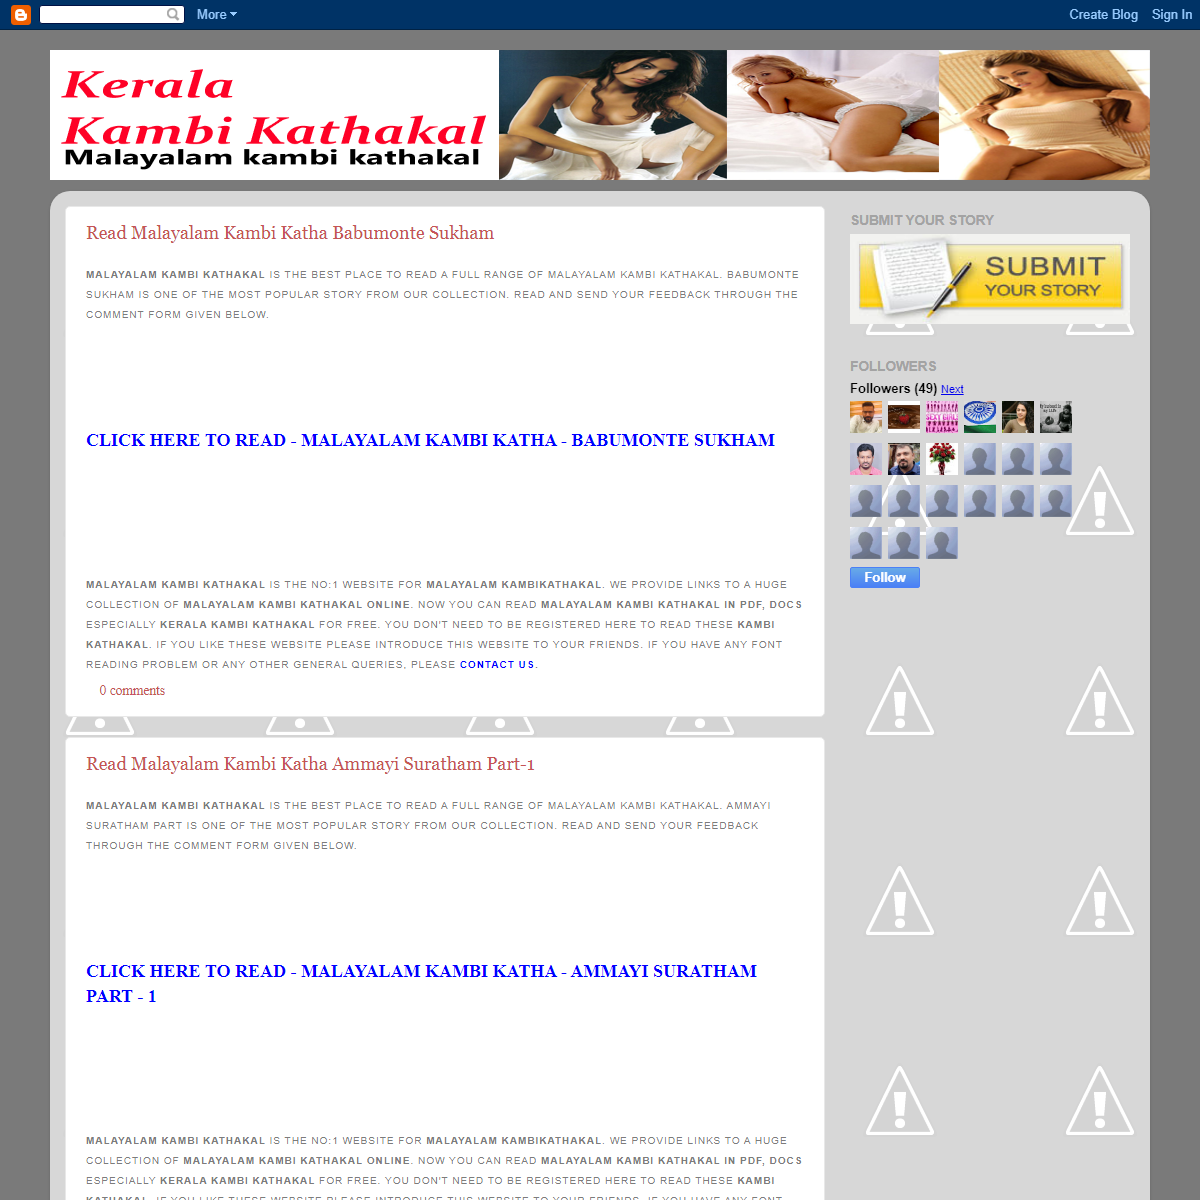 A complete backup of https://keralakambikathakal.blogspot.com/2011/09/